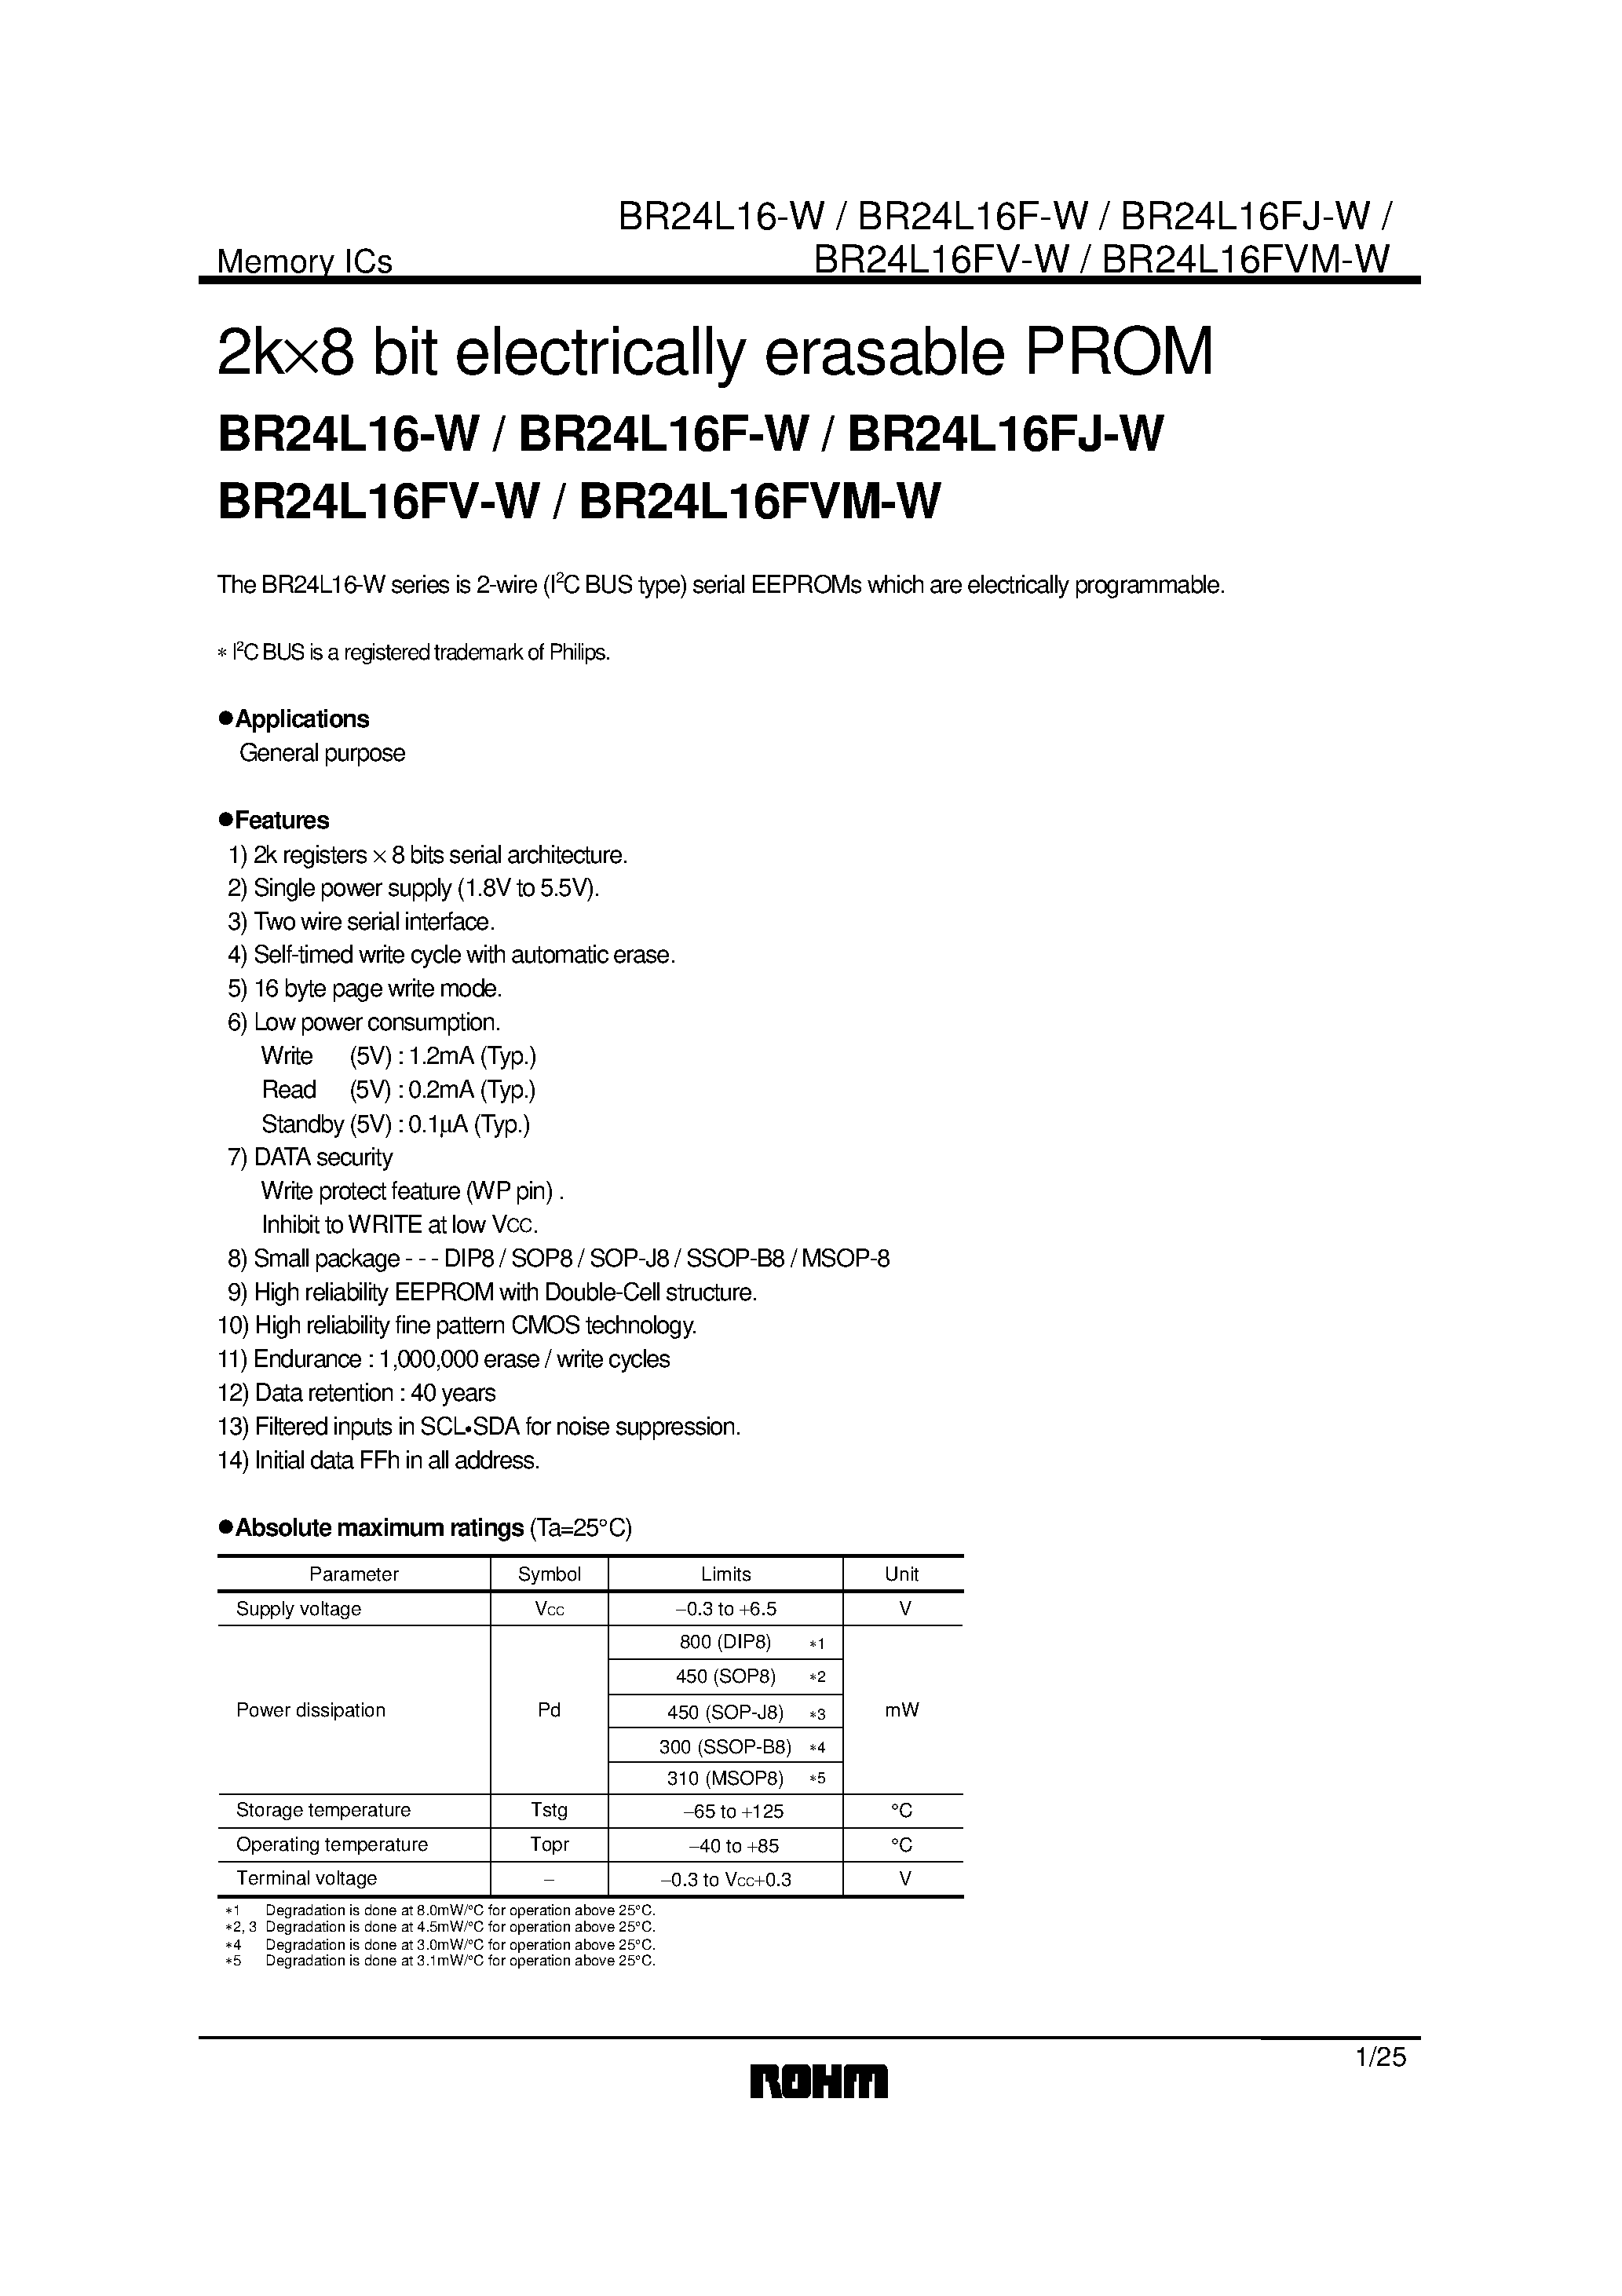 Datasheet BR24L16-W - 2k8 bit electrically erasable PROM page 1